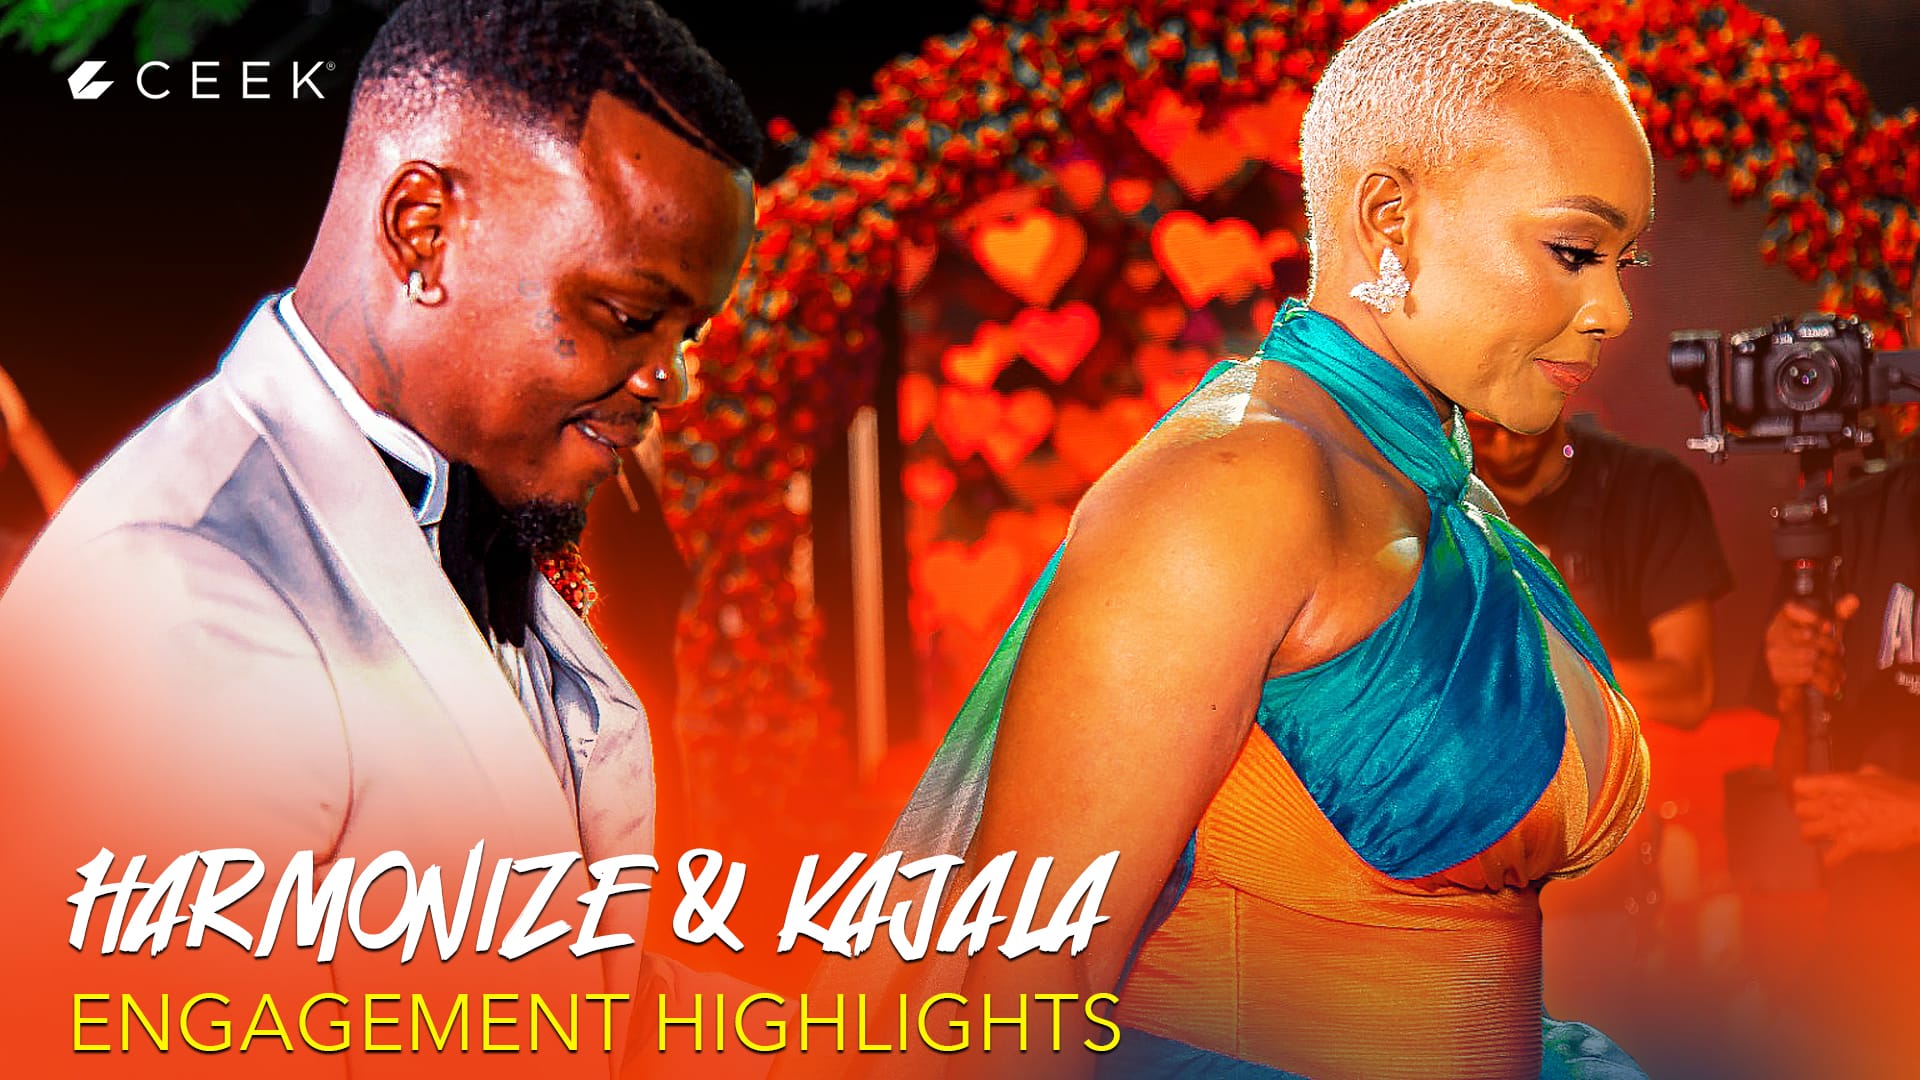 Harmonize and Kajala Engagement Highlights ceek.com